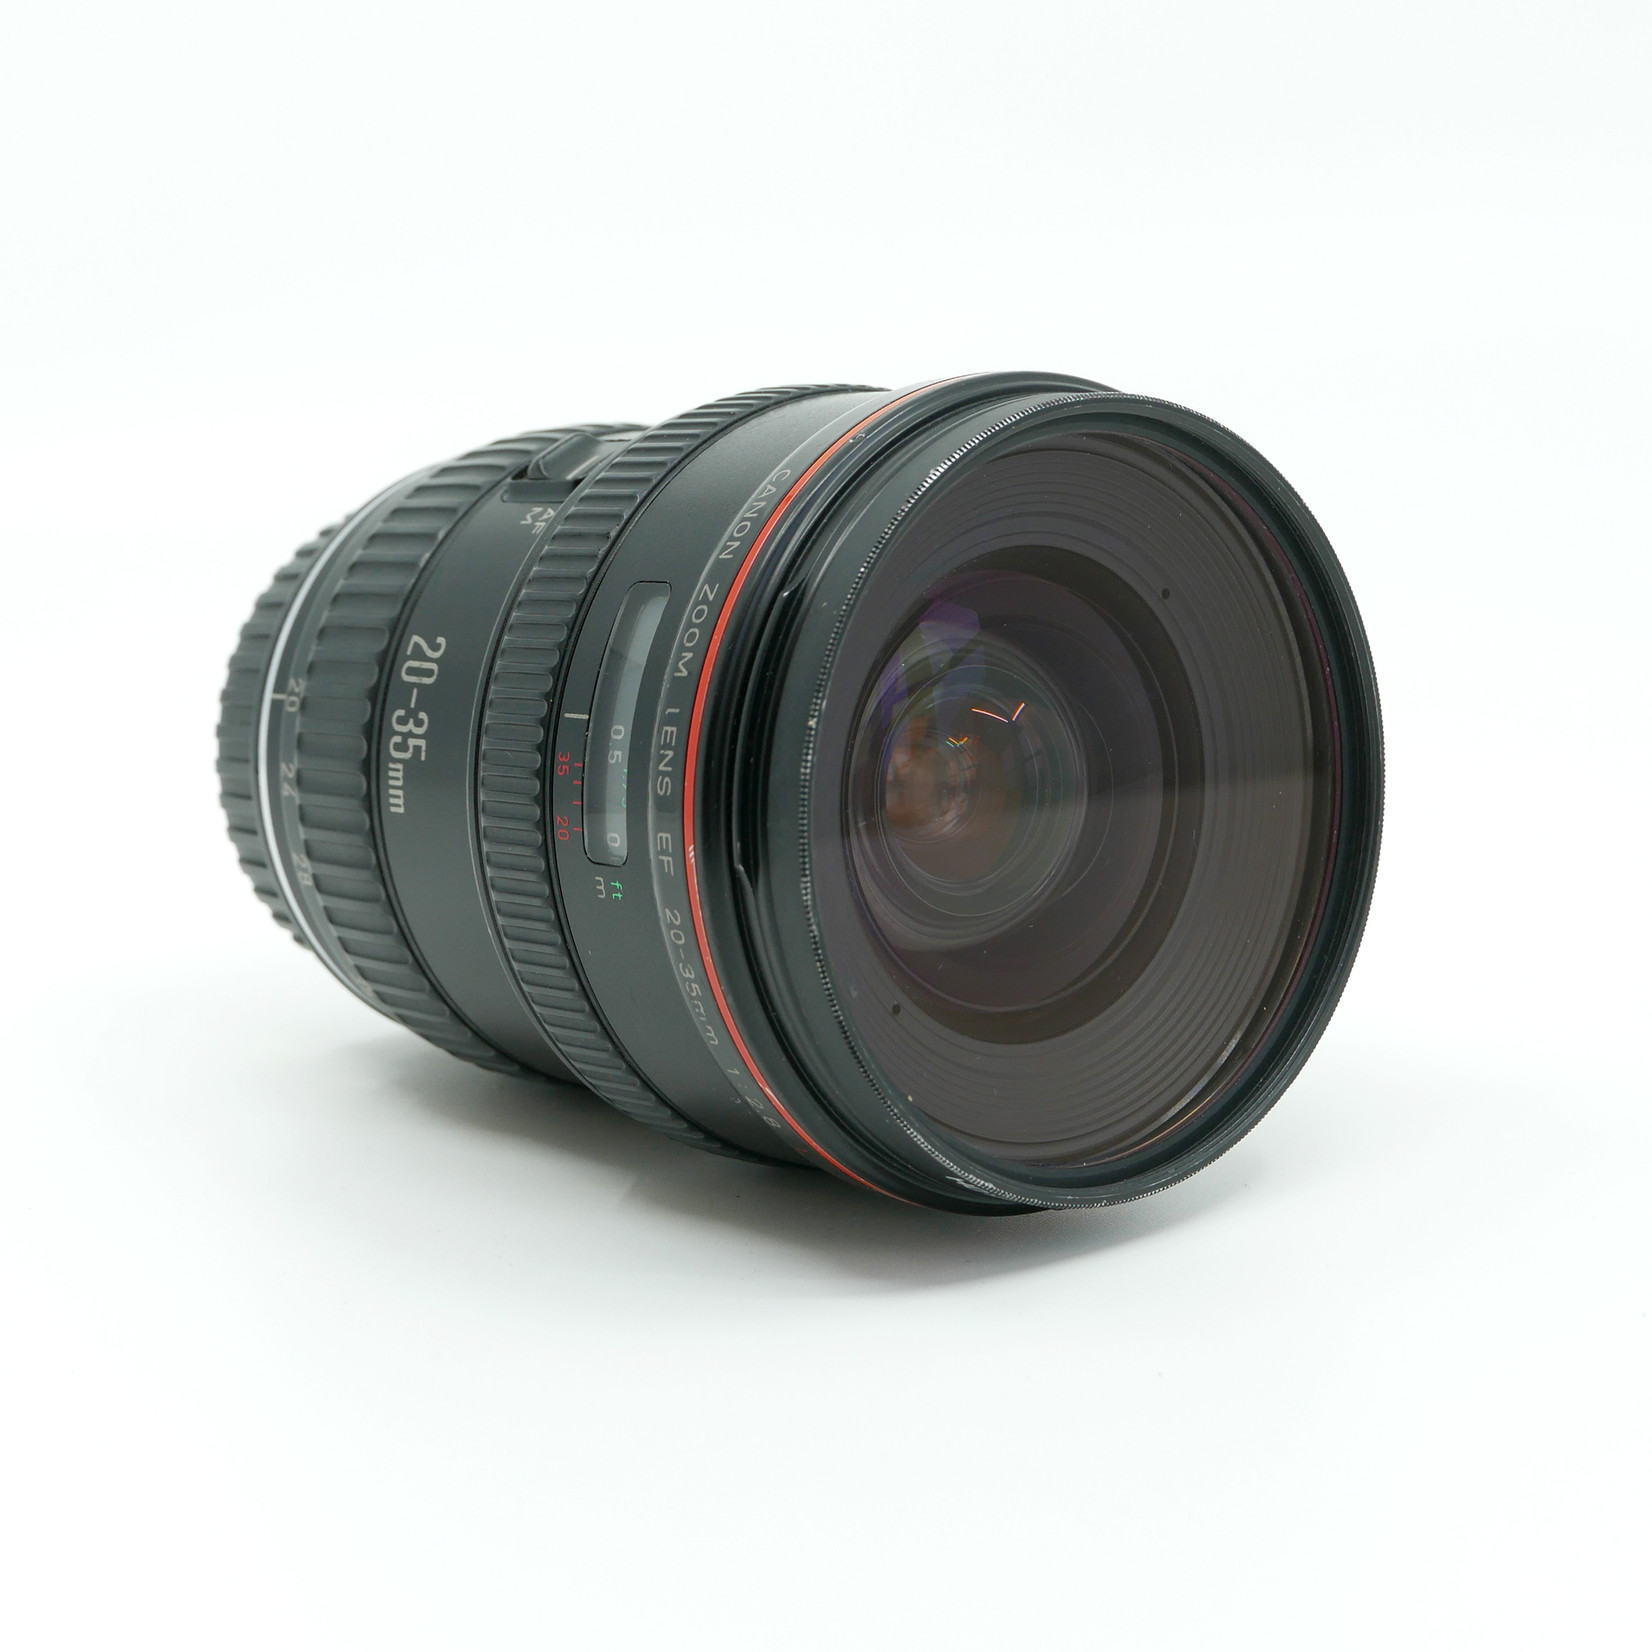 Canon Canon EF 20-35mm f:2.8L (Used)